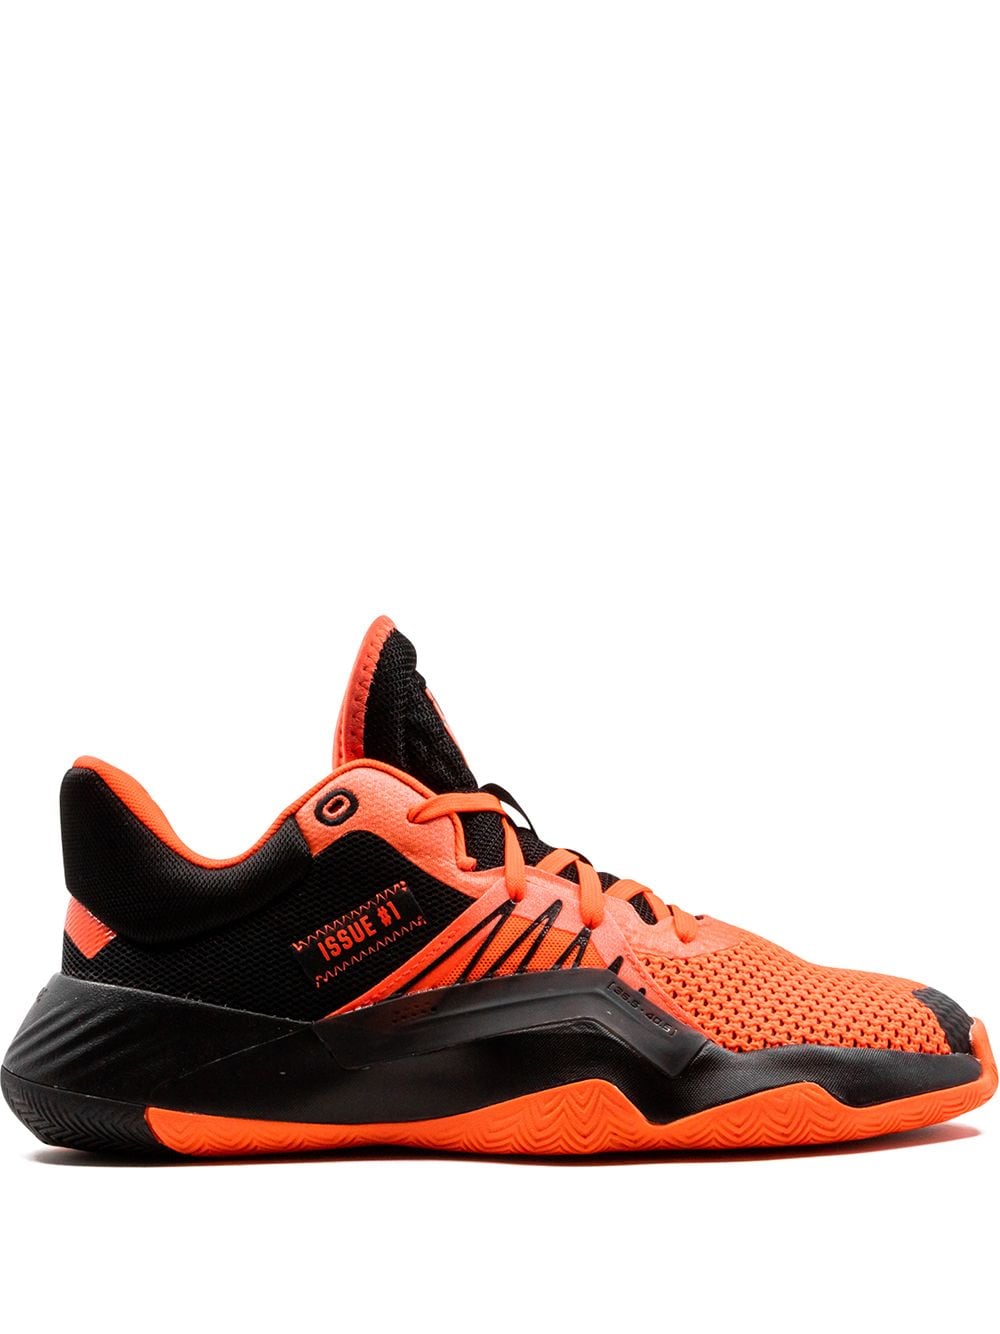 adidas D.O.N. Issue #1 sneakers - Orange von adidas